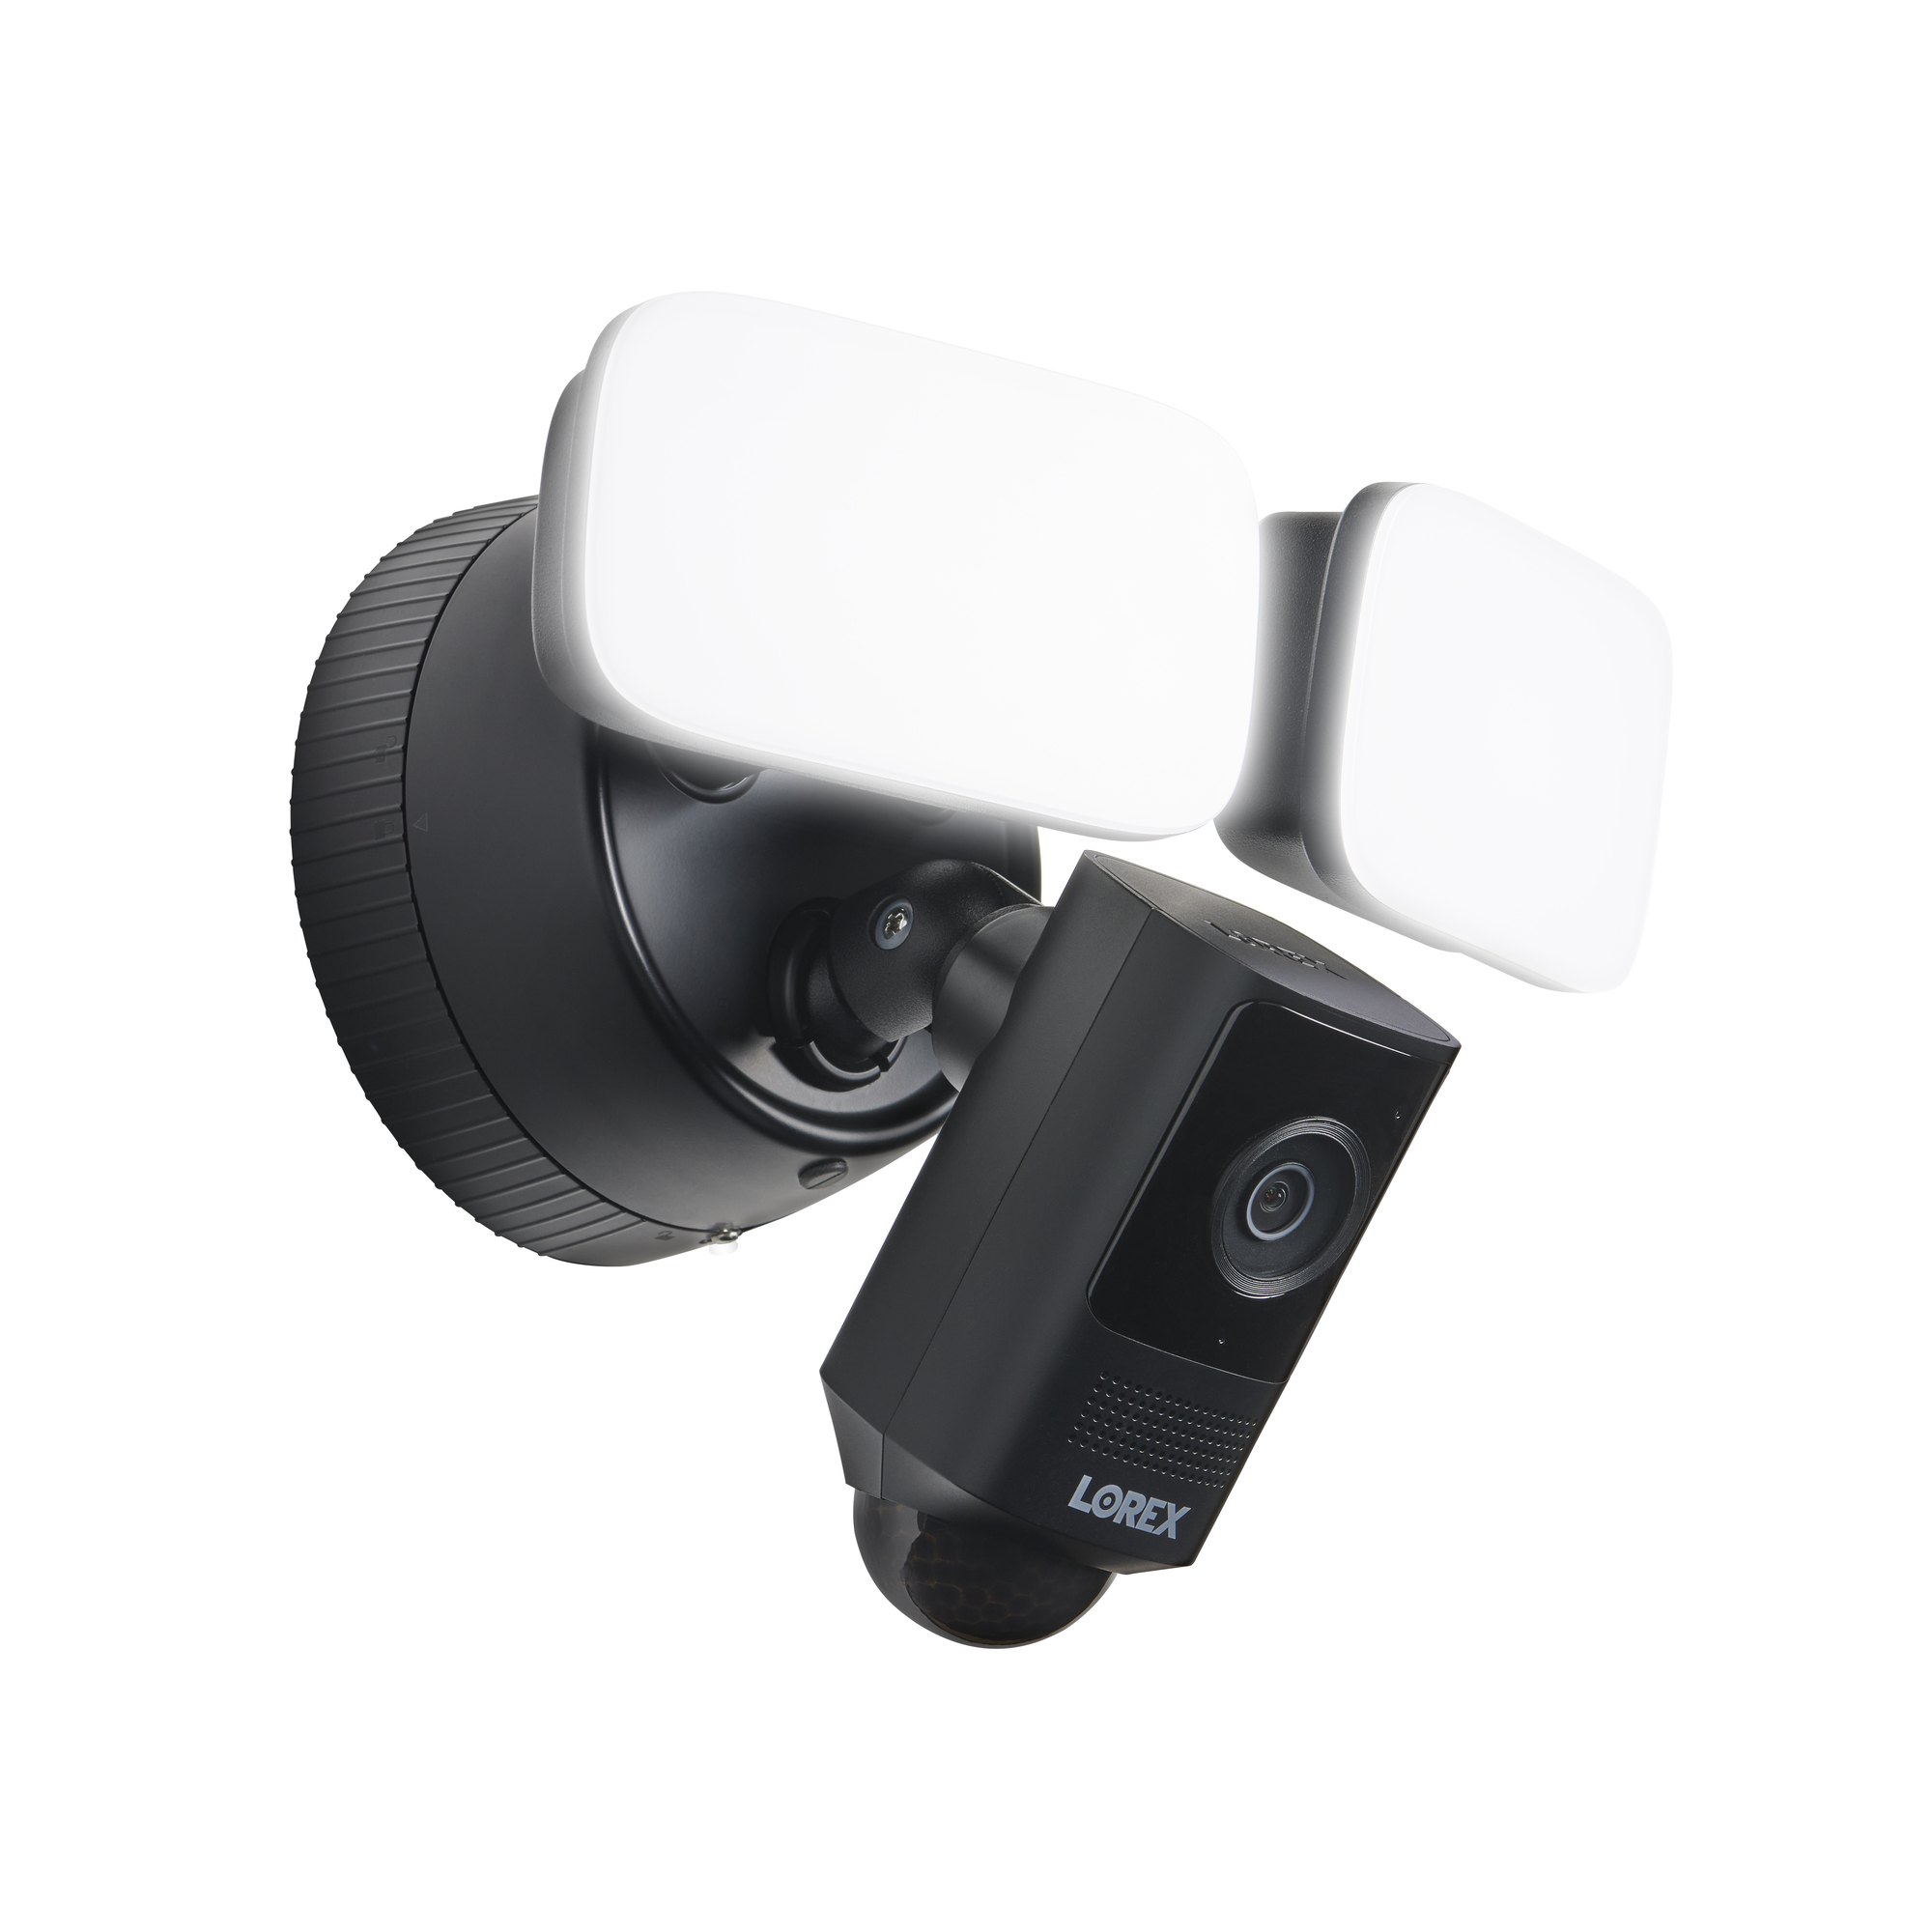 Lorex, 2K Wired Floodlight Camera Black, Product Style DVR/monitoring kit, Camera (qty.) 1 Resolution 2K, Model W452ASDB-E